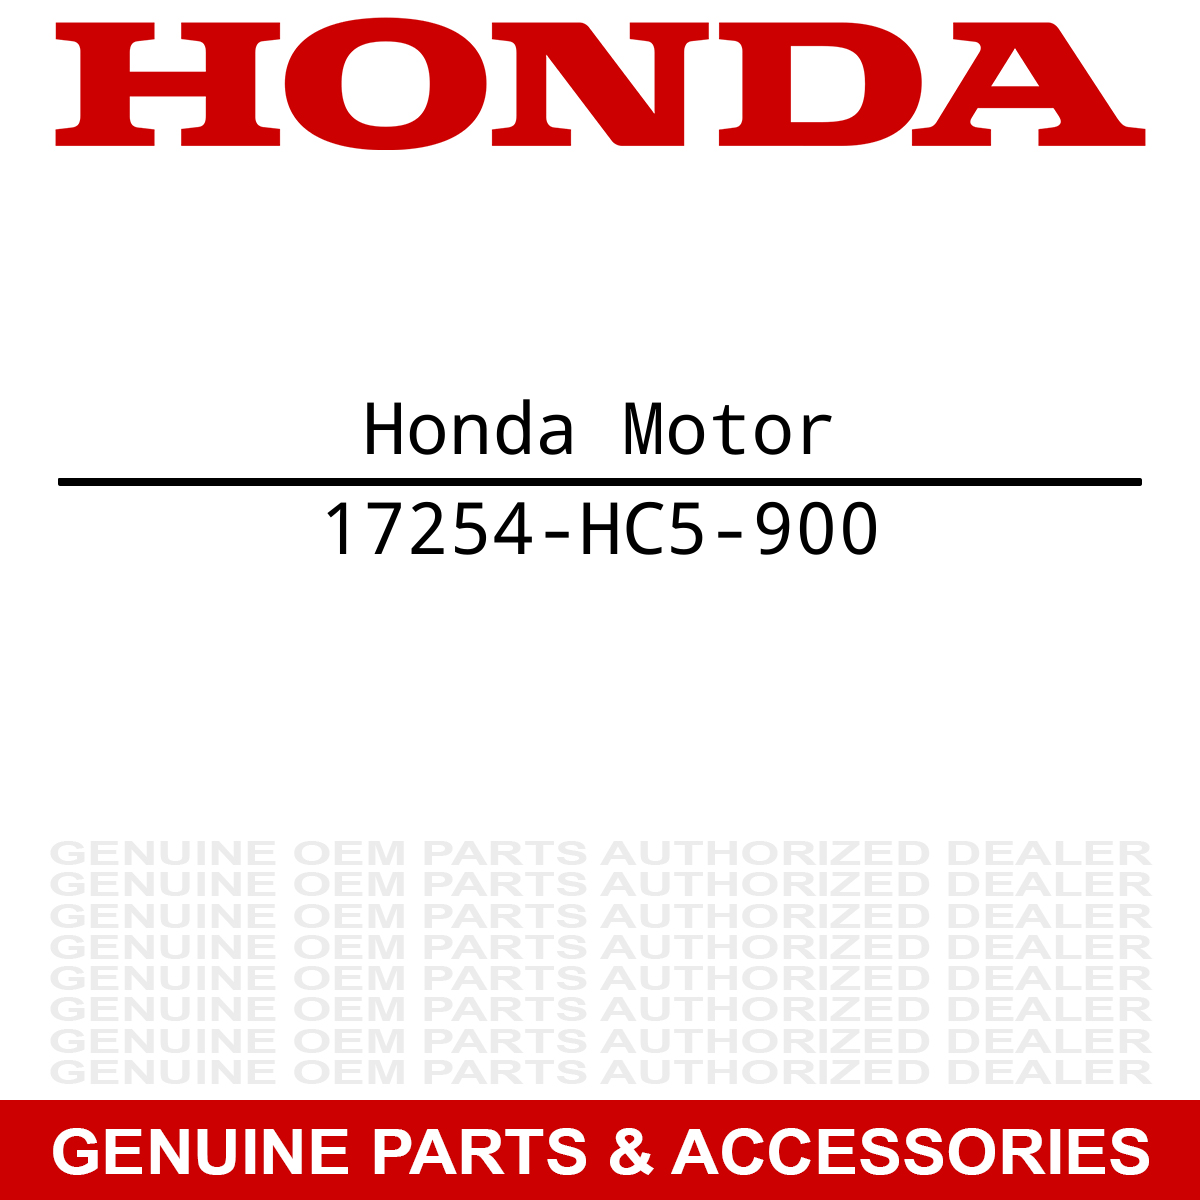 Honda 17254-HC5-900 Air Filter FourTrax Foreman 300 400 450 Foreman